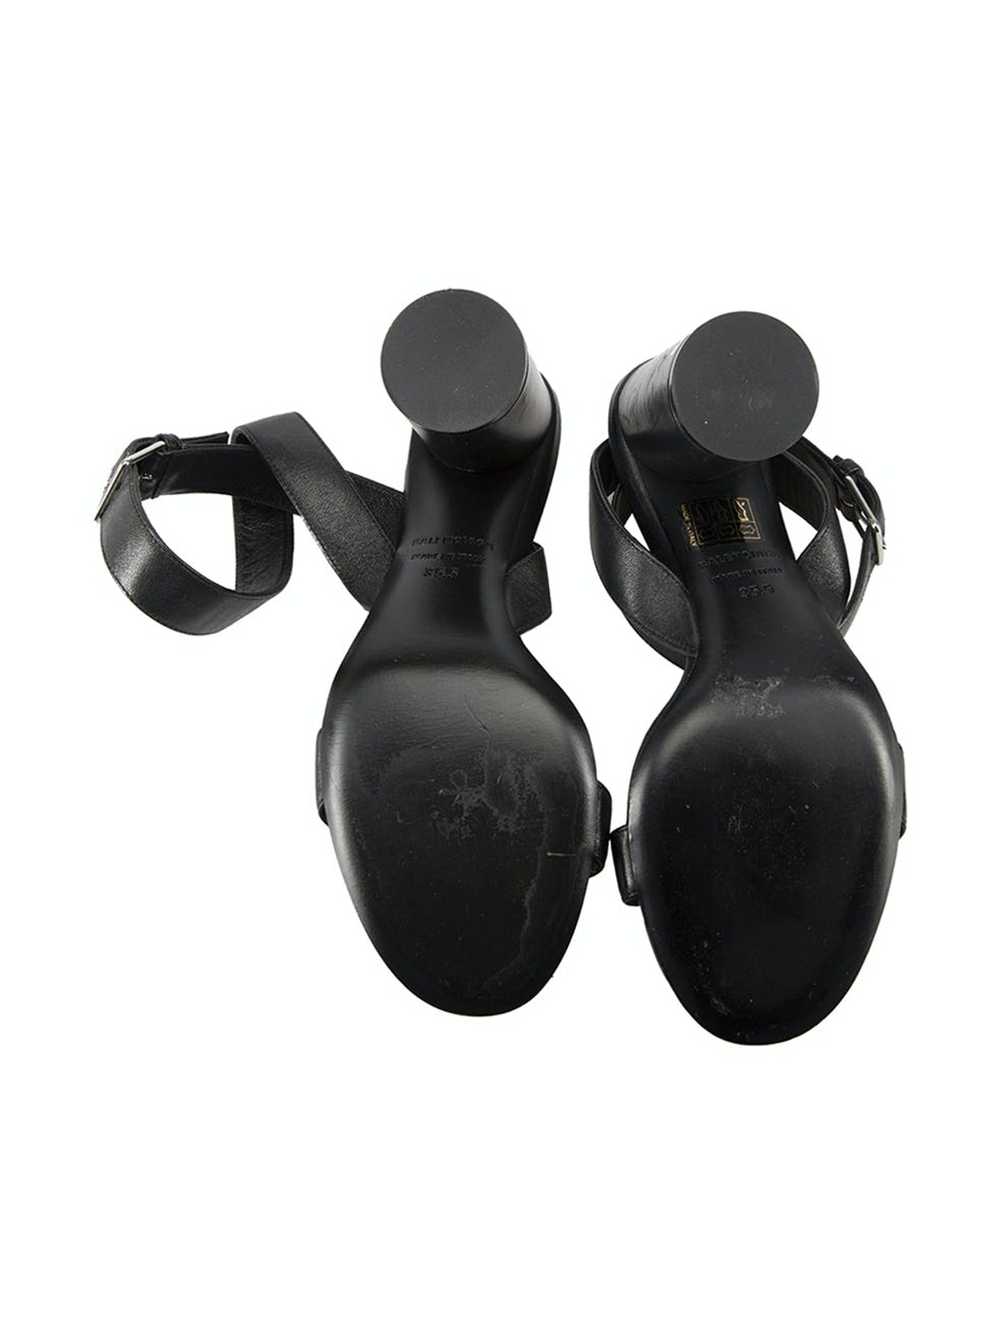 Balenciaga Black Leather Strappy Mid Heel Sandals - image 4